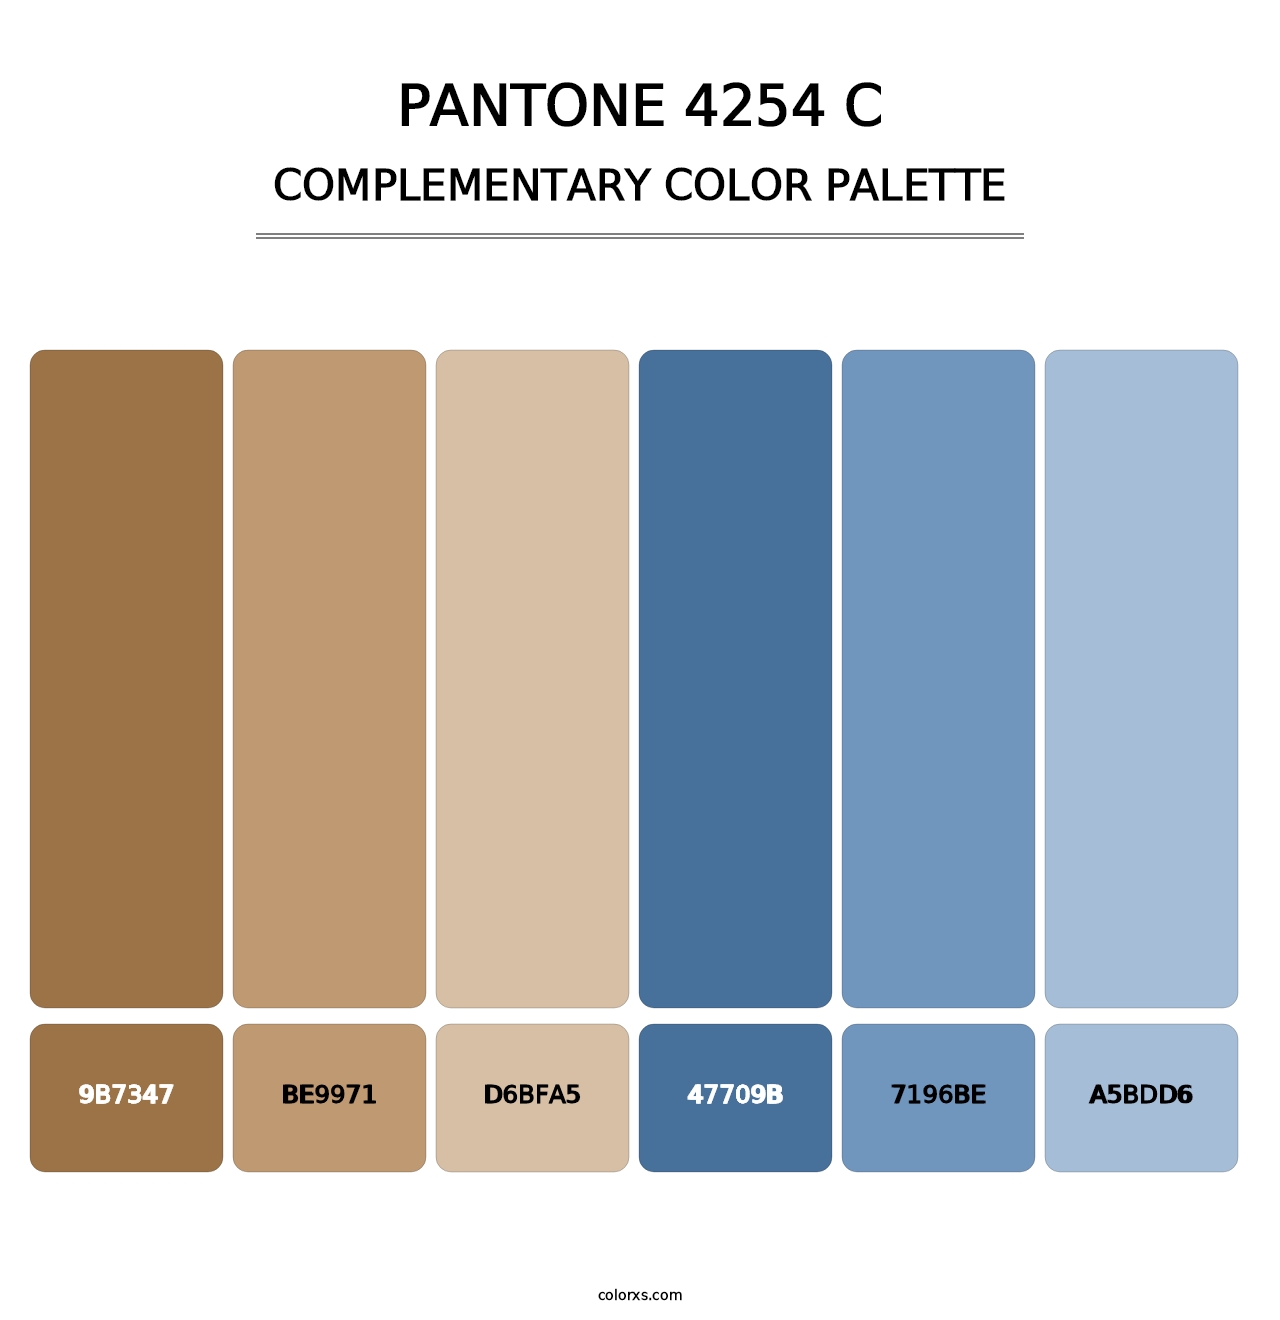 PANTONE 4254 C - Complementary Color Palette